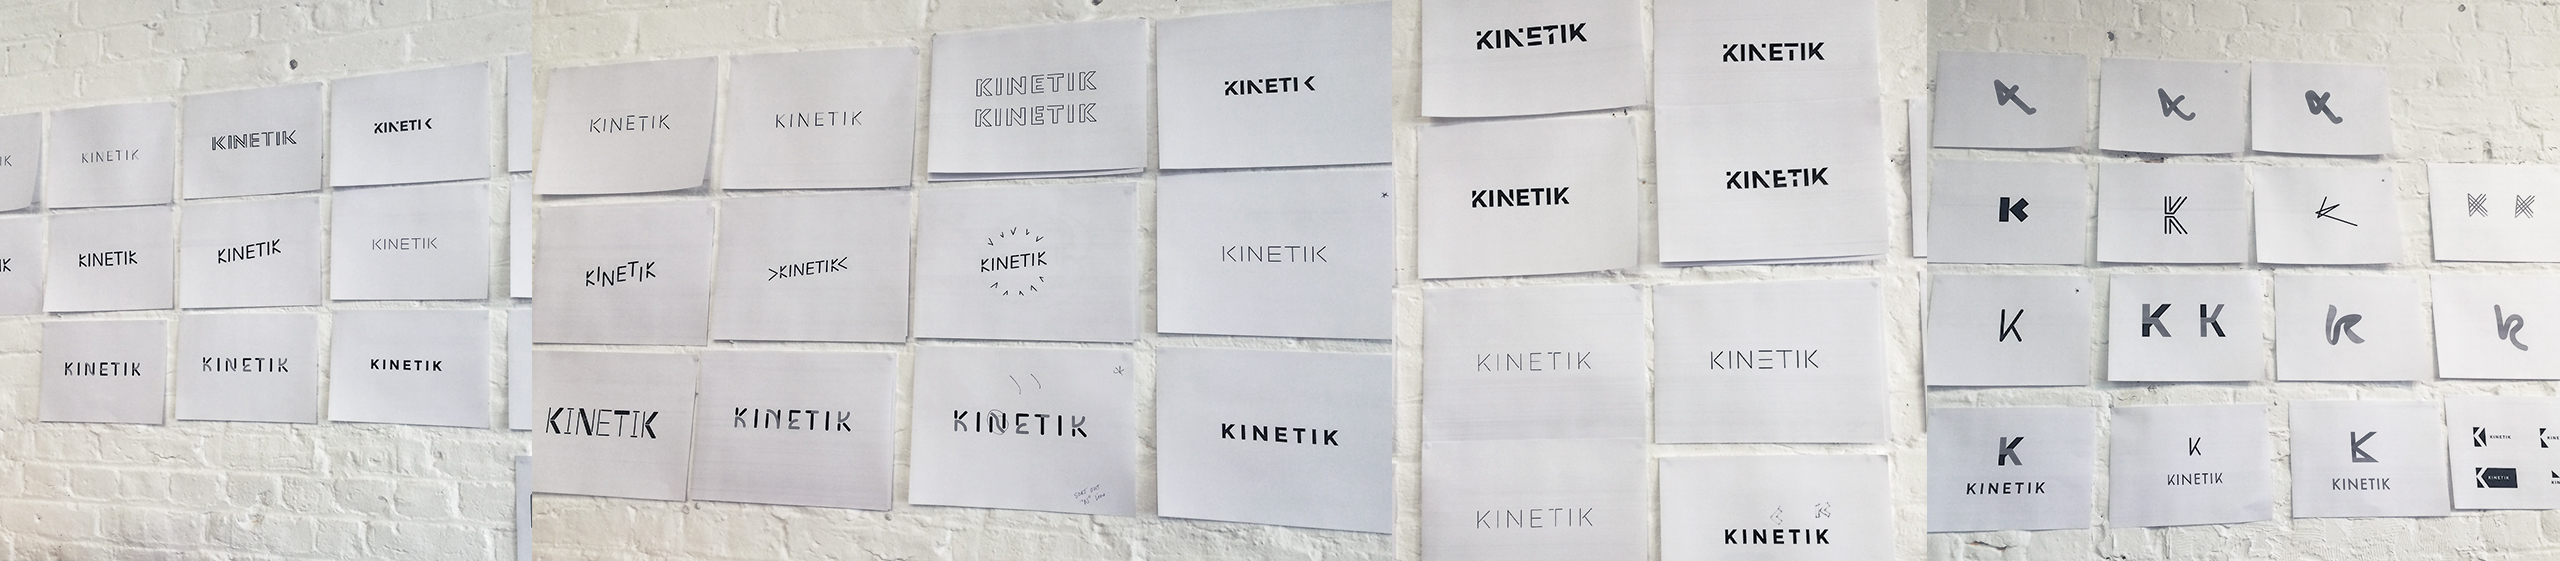 kinetik logo wall